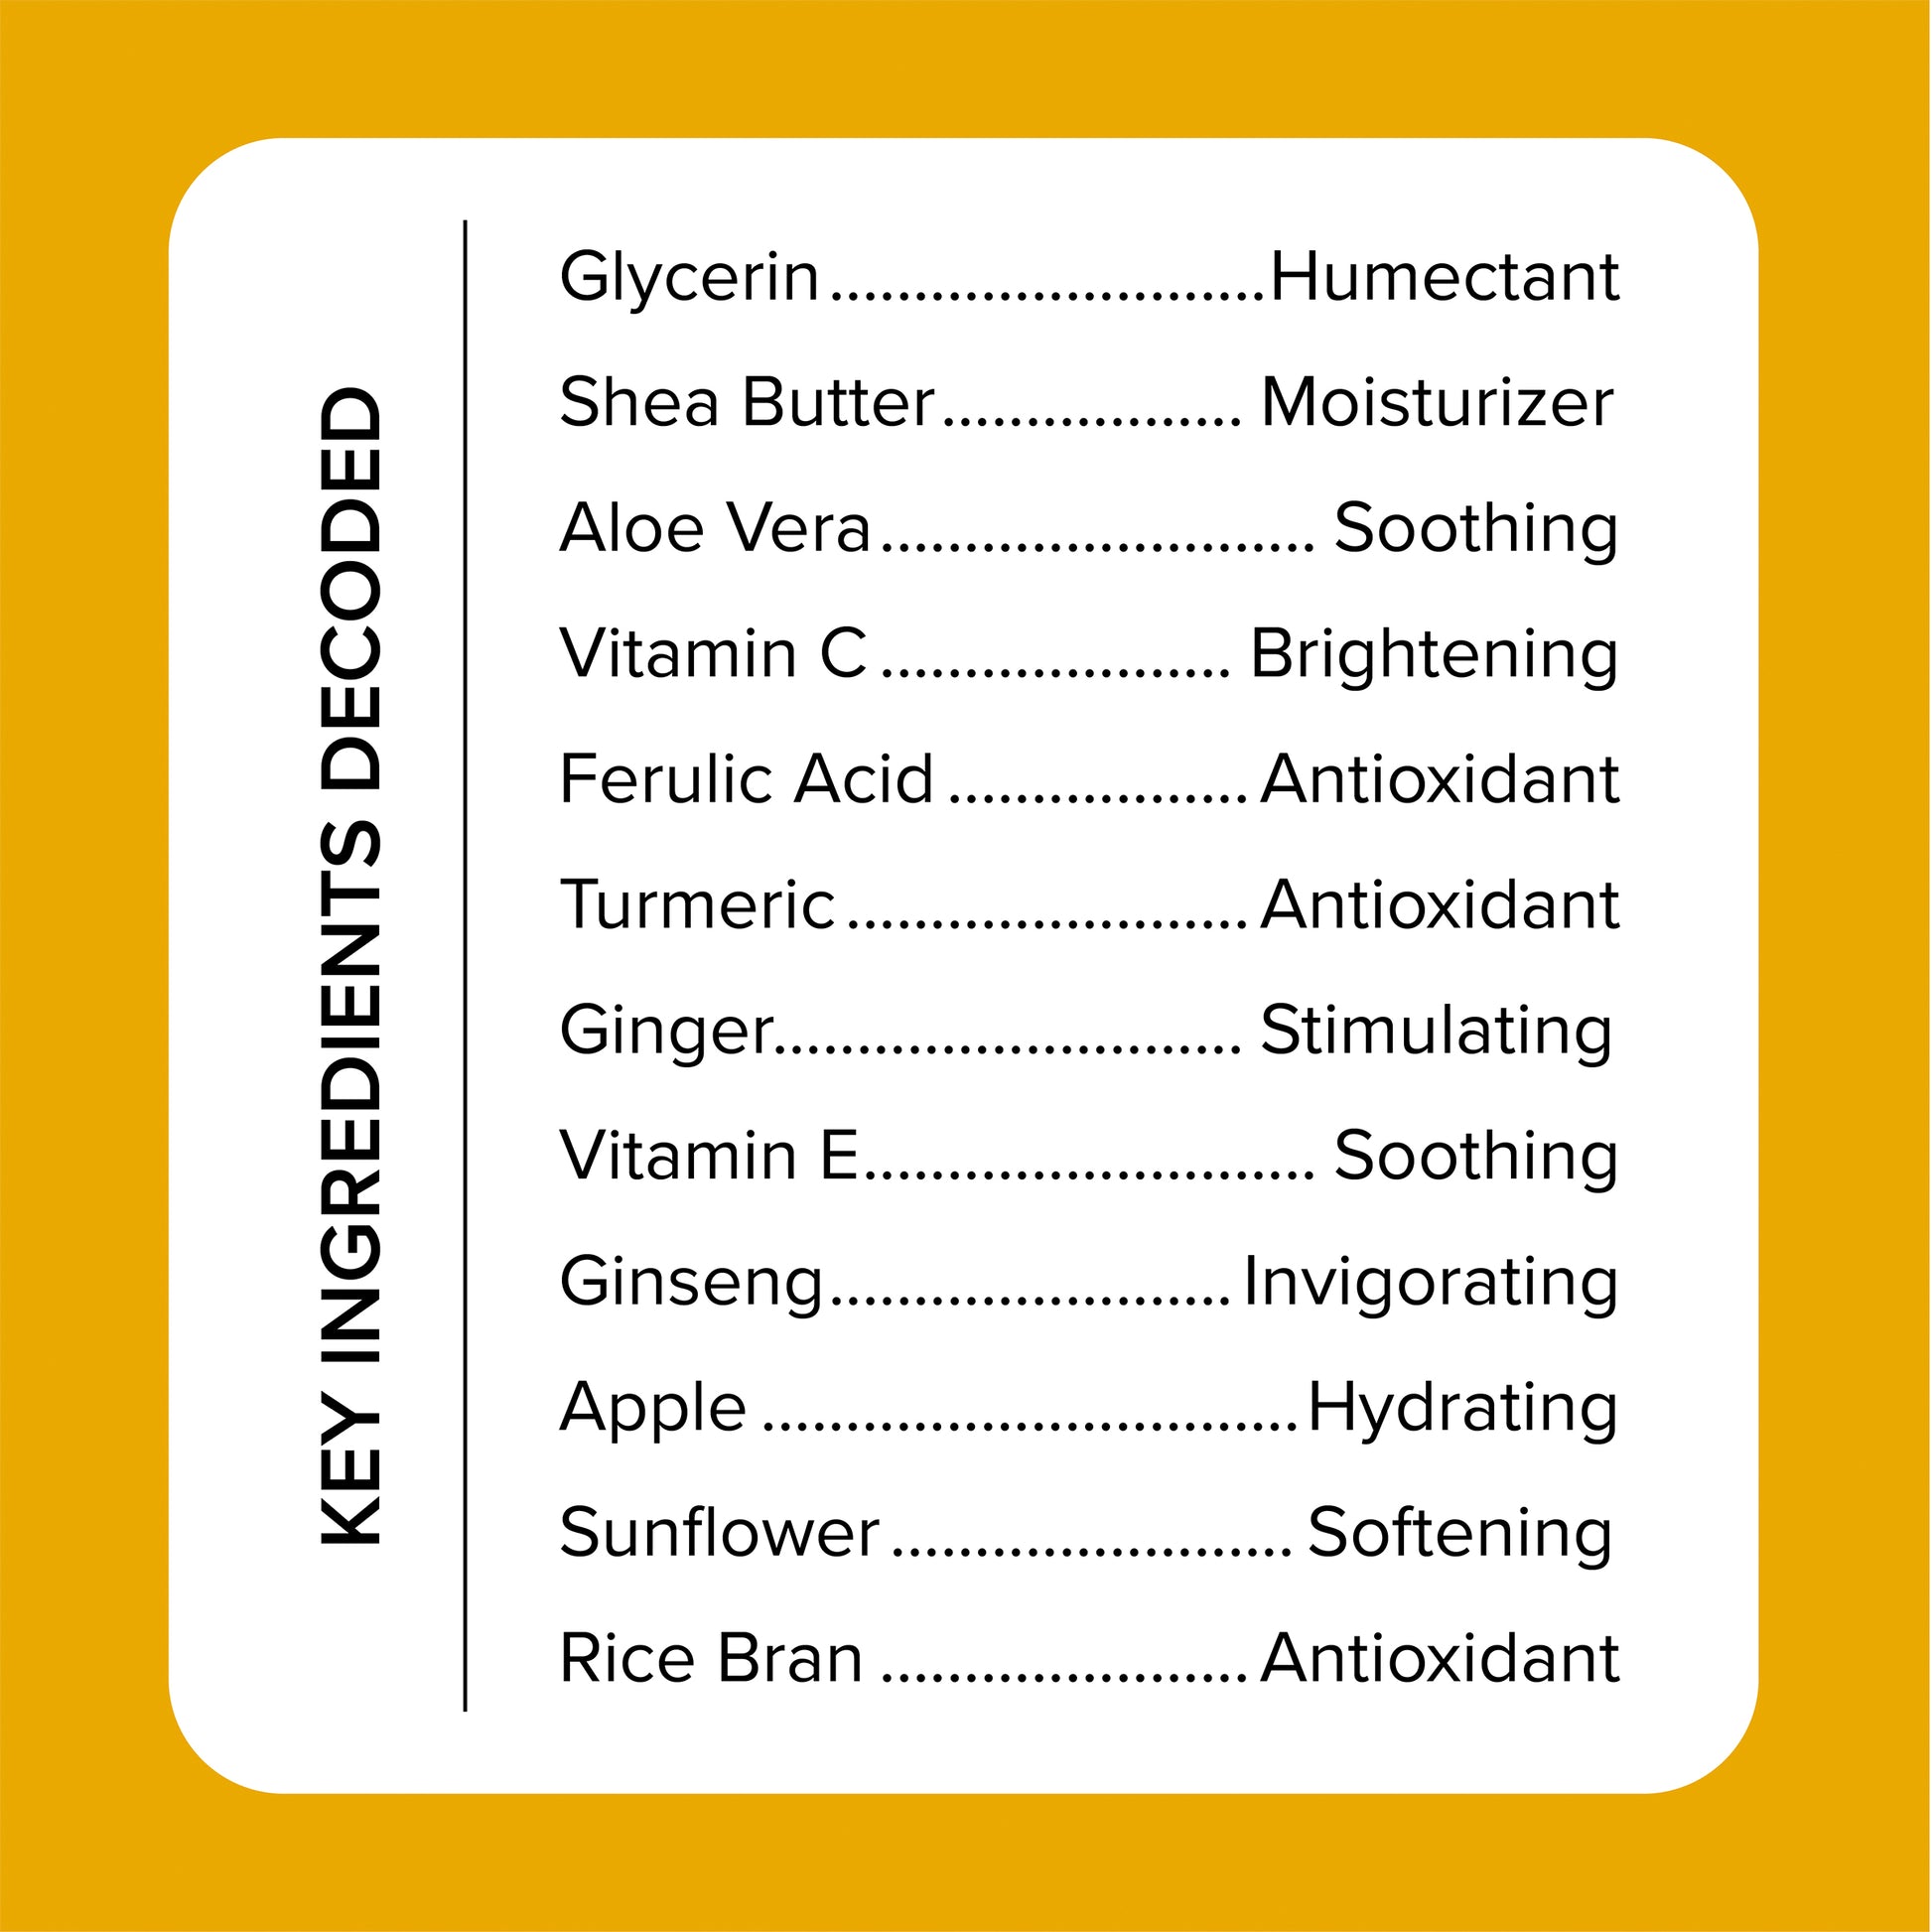 Vitamin C + Turmeric Brightening Moisturizer Body Cream